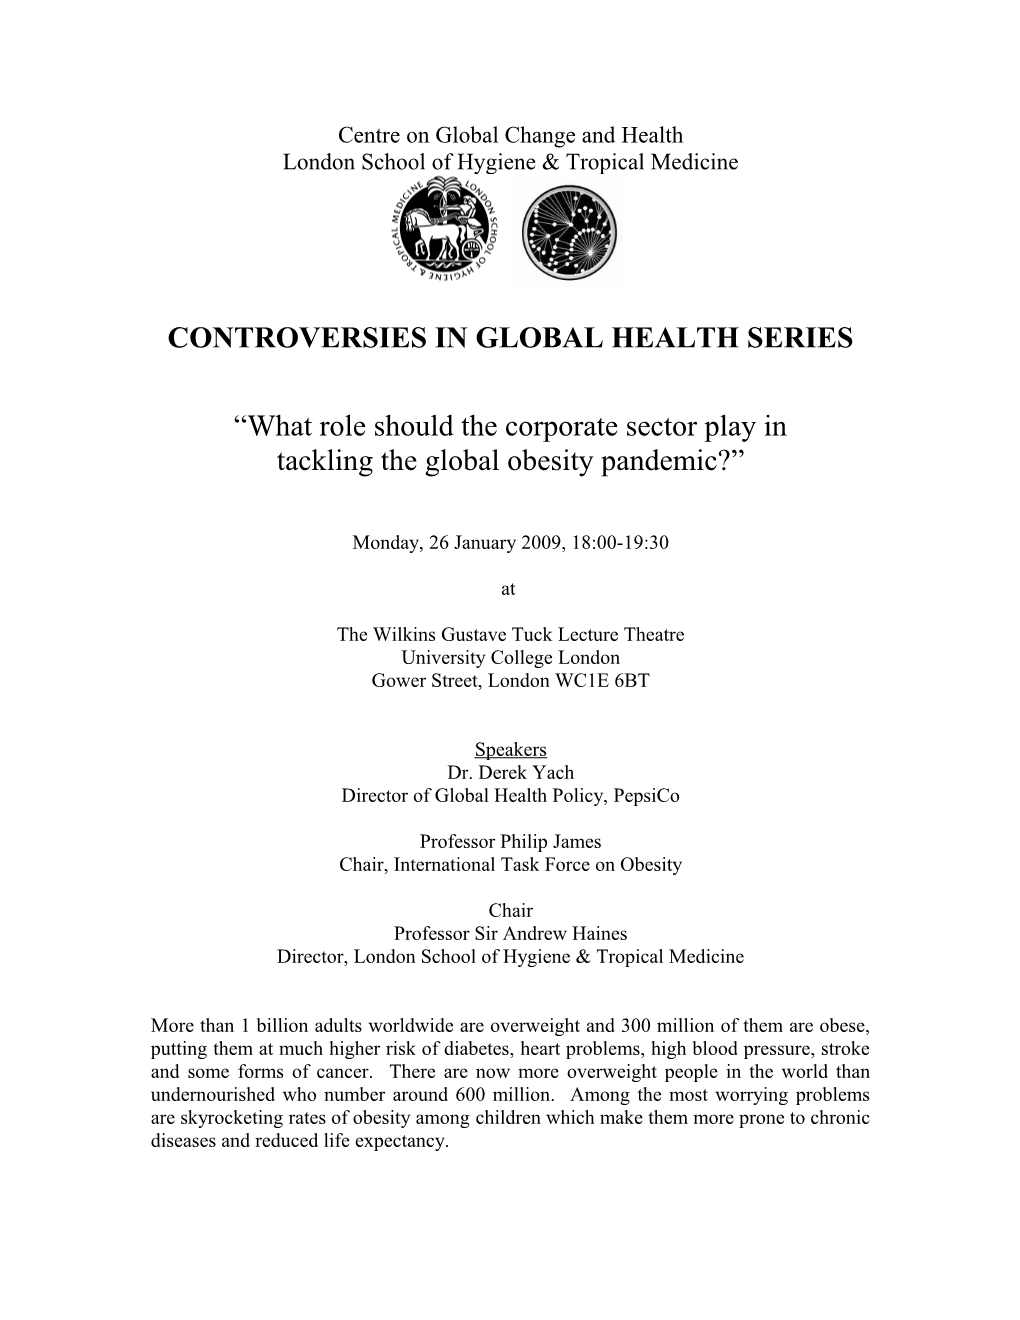 Key Controversies in Global Health